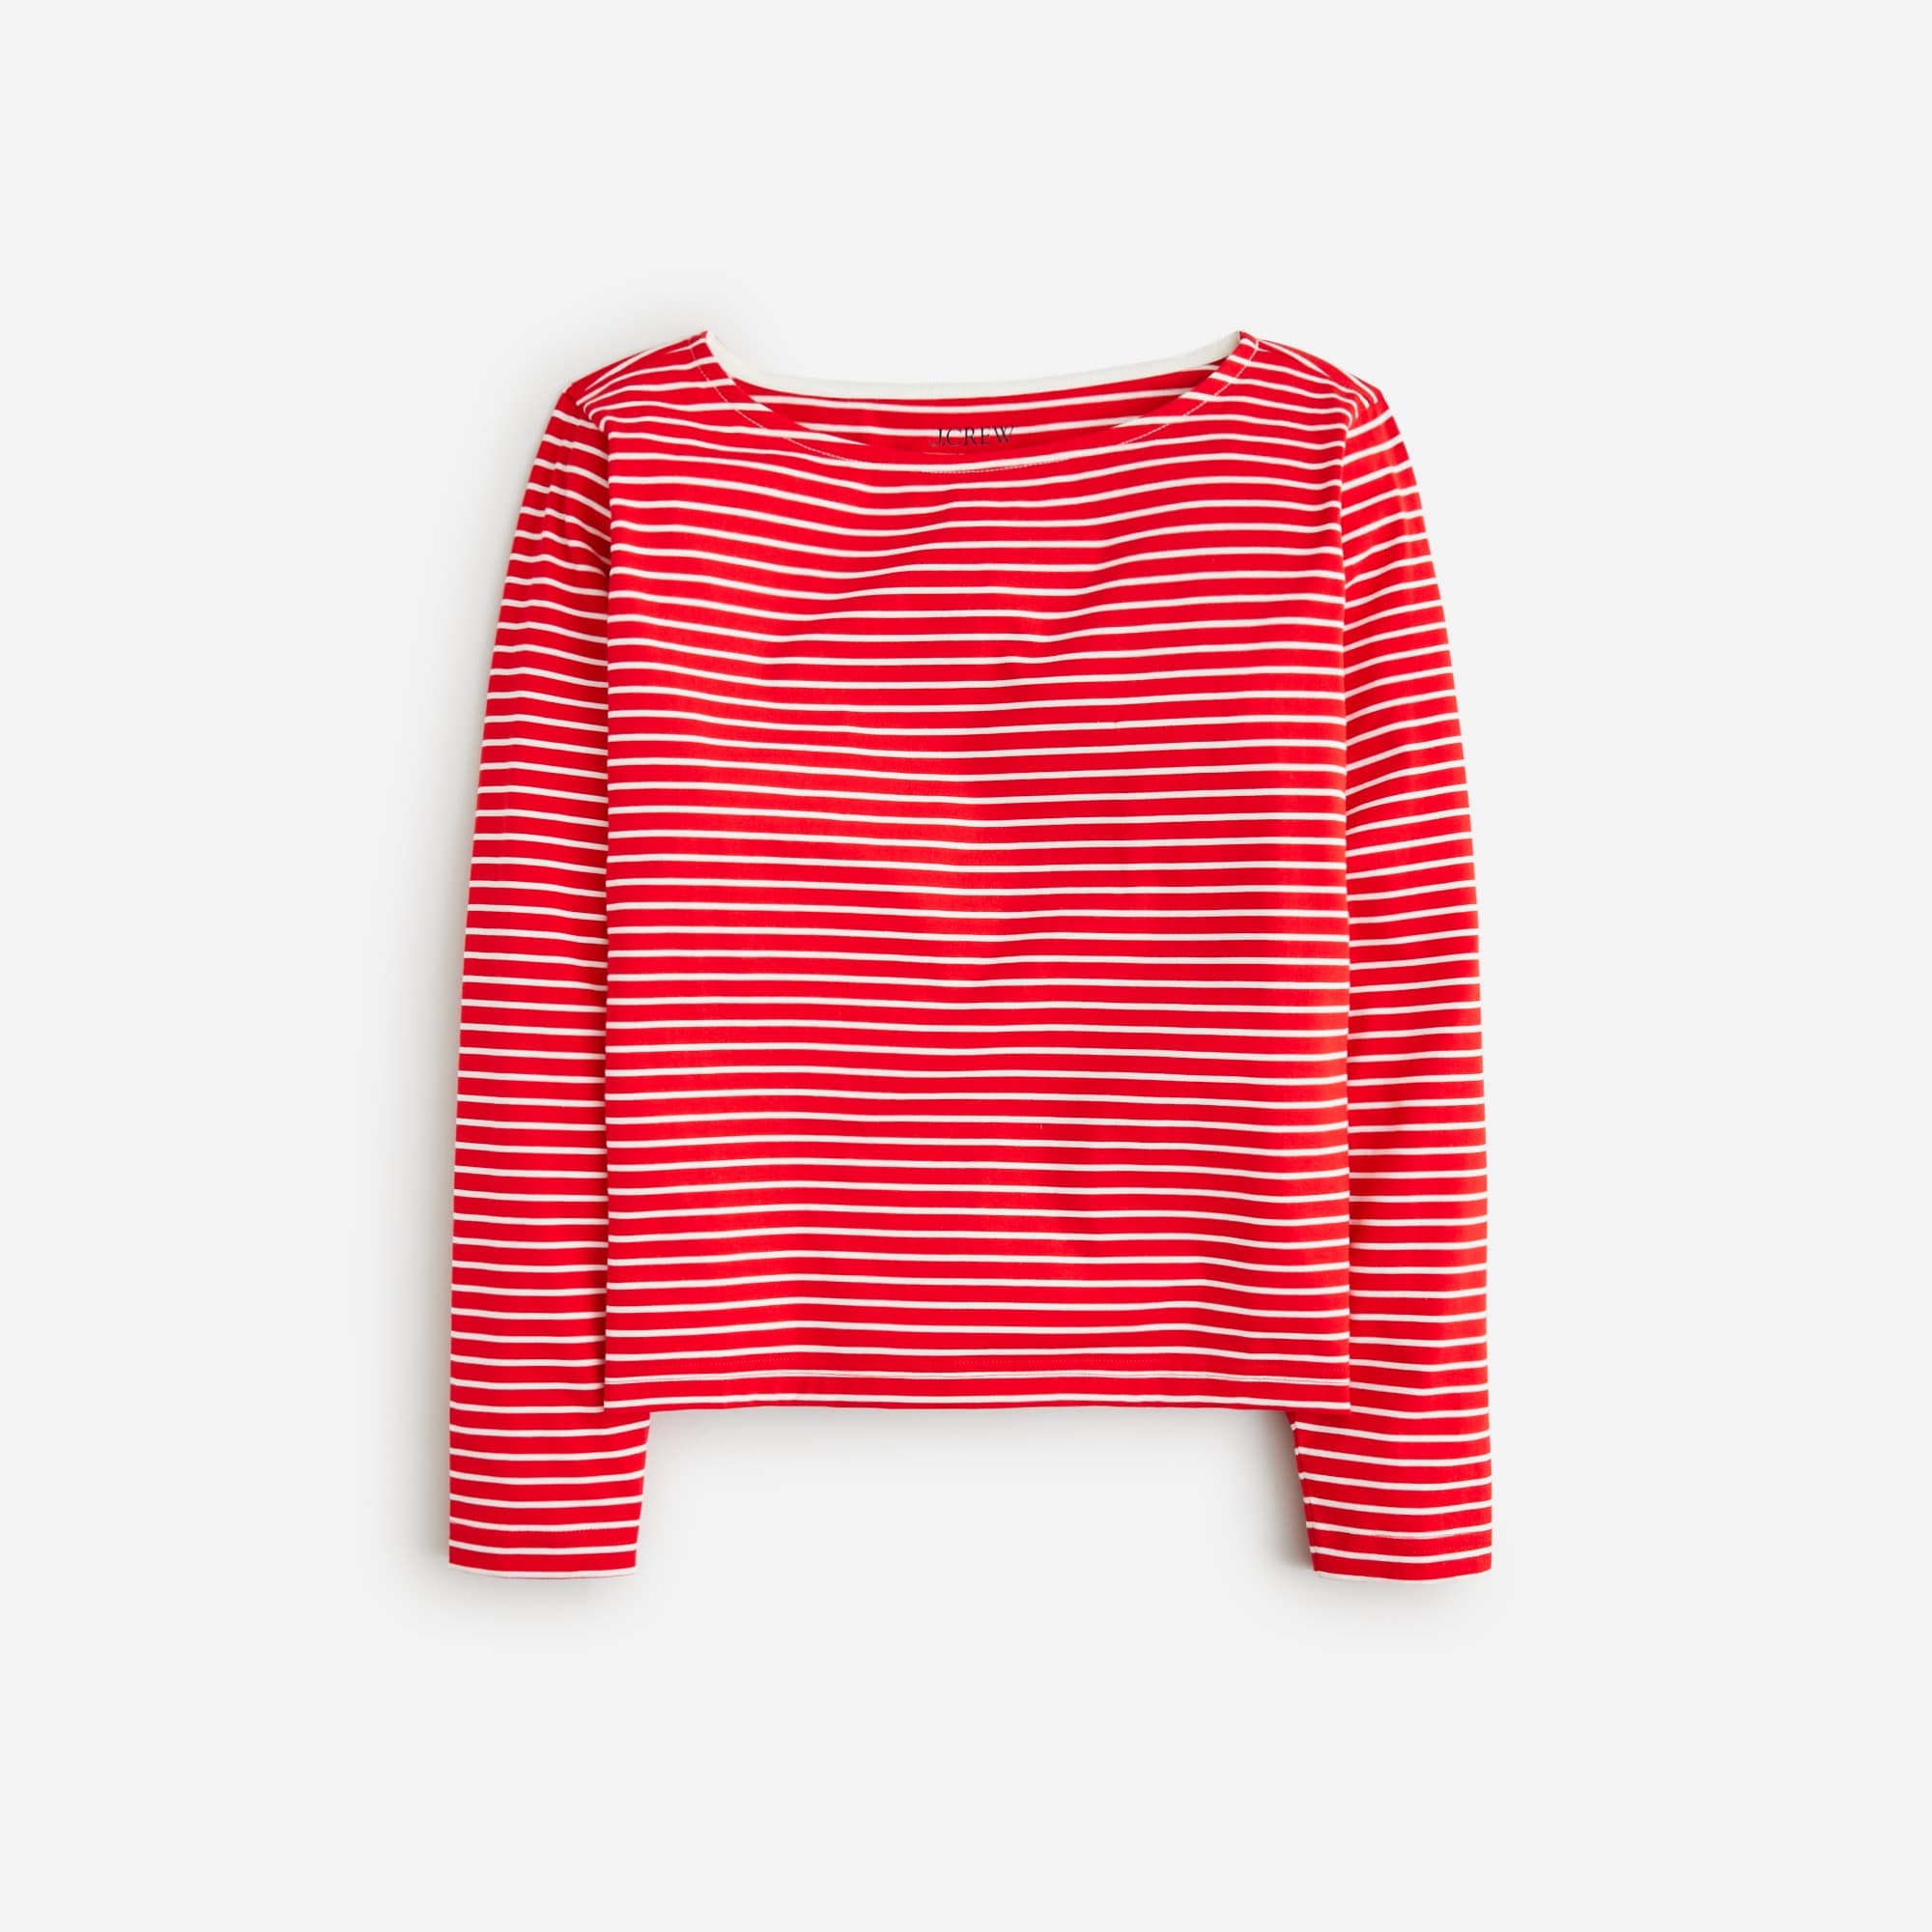  Pima cotton long-sleeve T-shirt in stripe